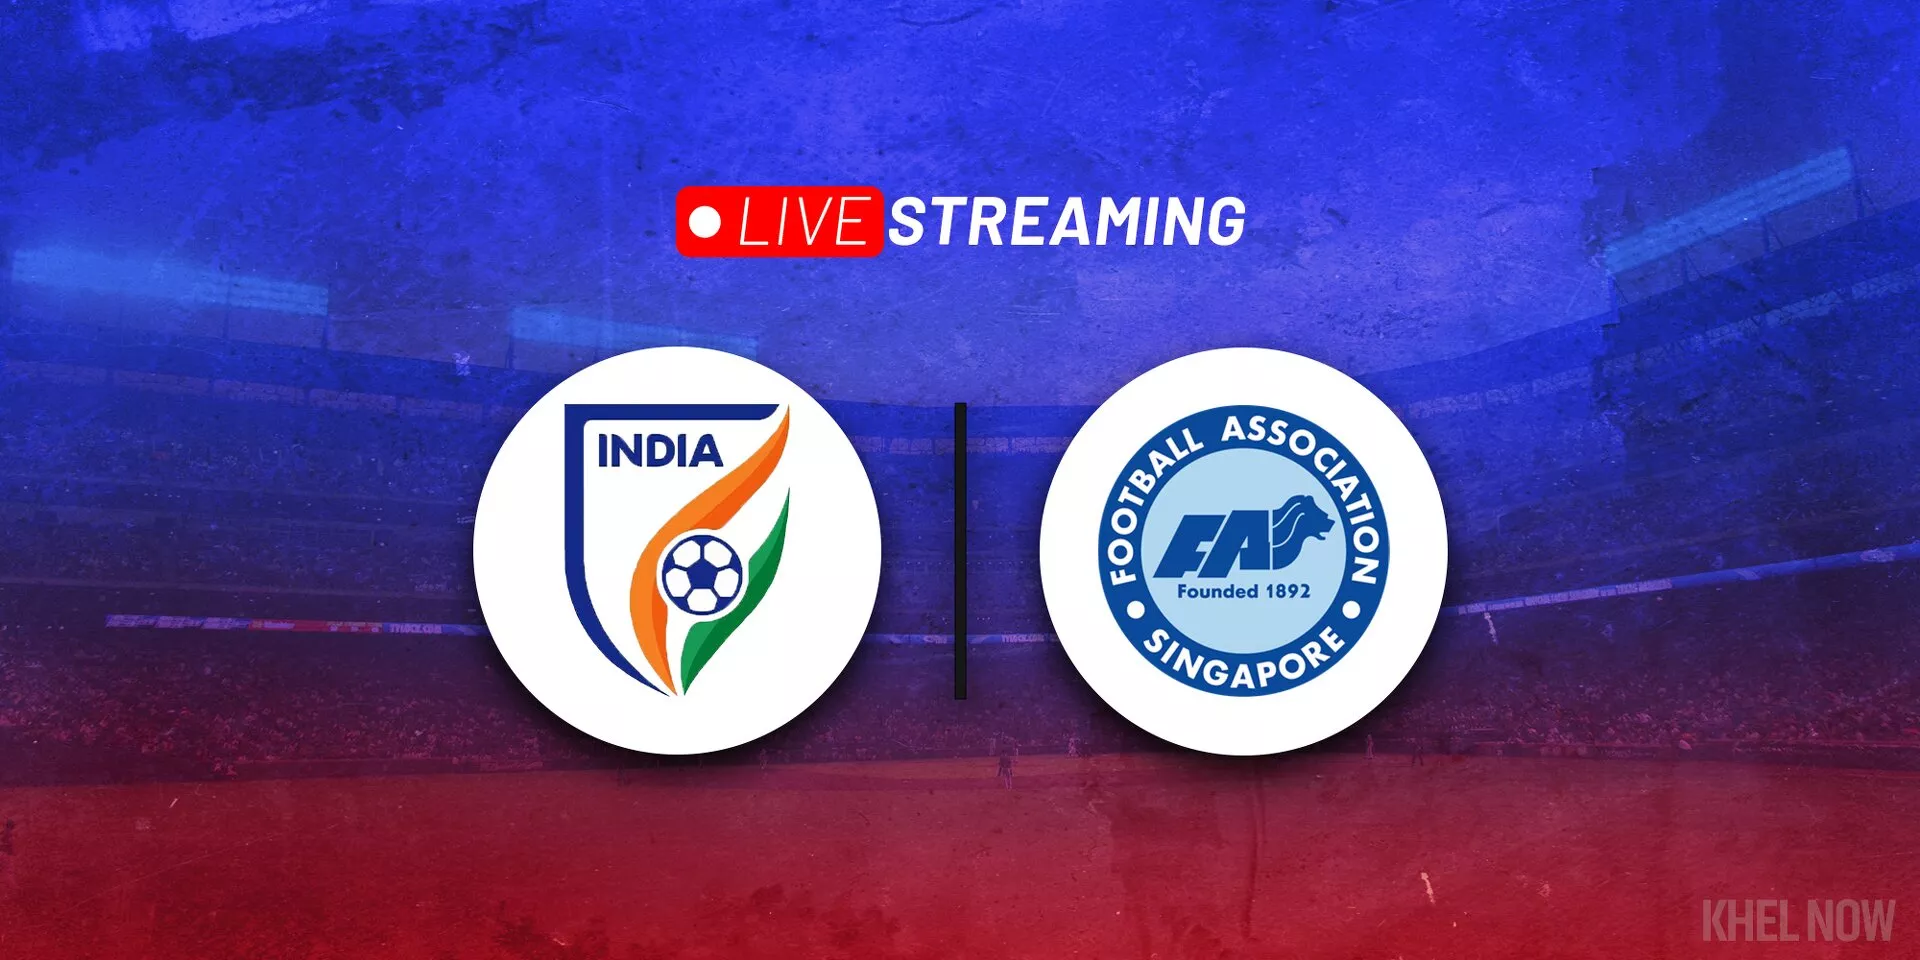 India vs Singapore Live Streaming